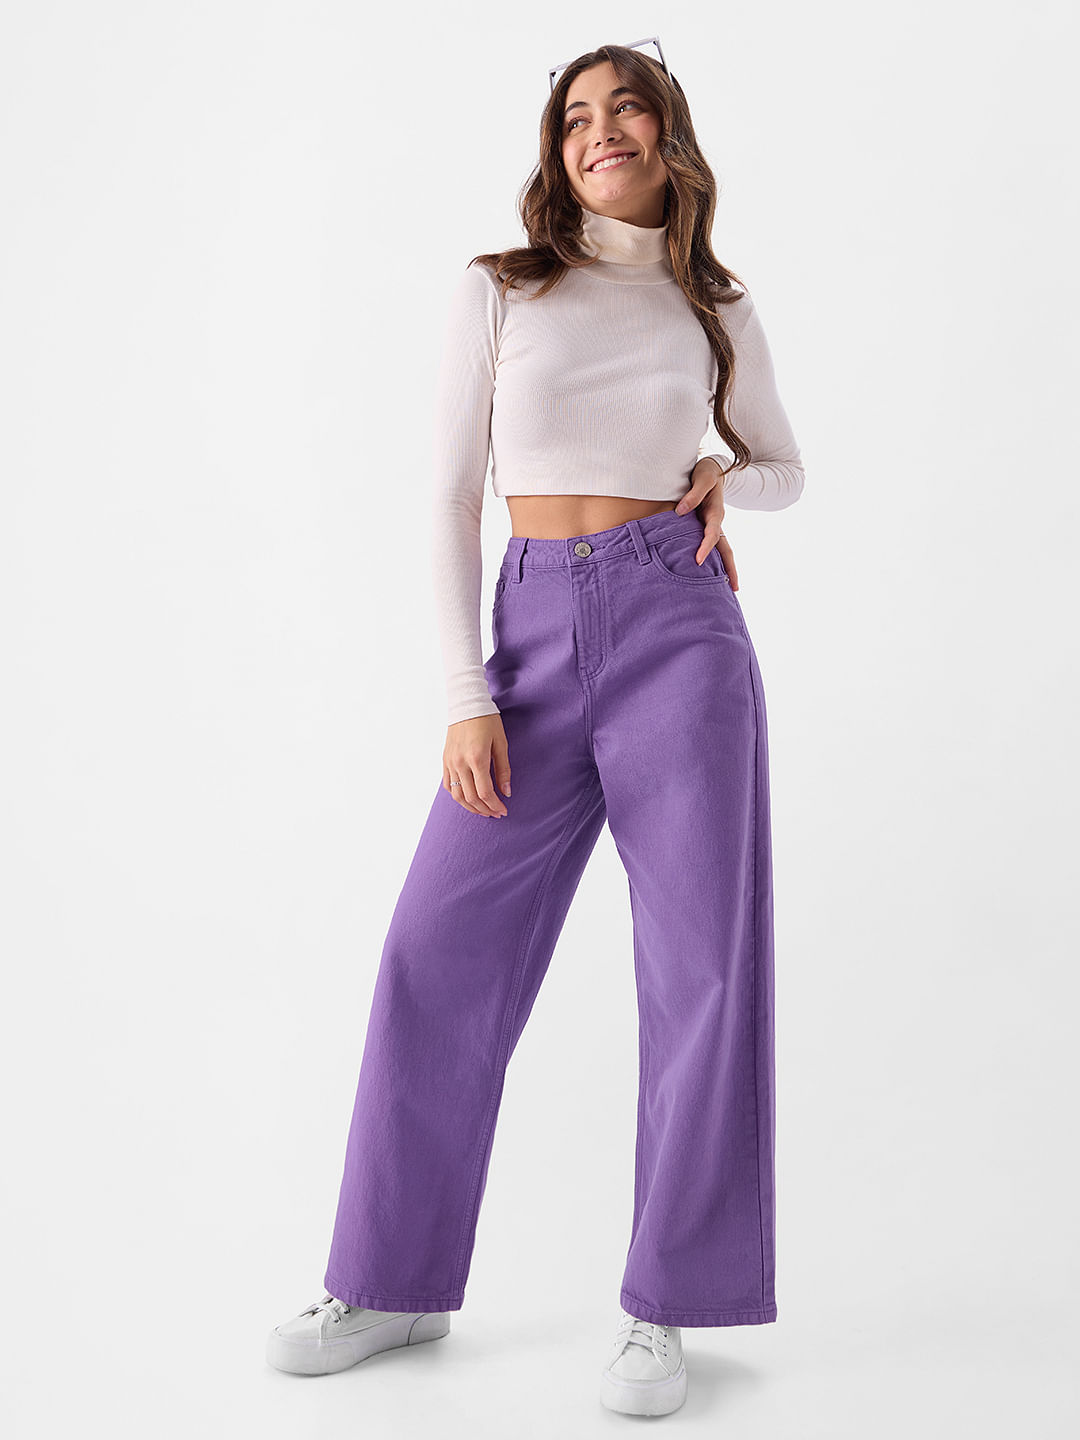 Buy Solids: Violet Women Jeans Online